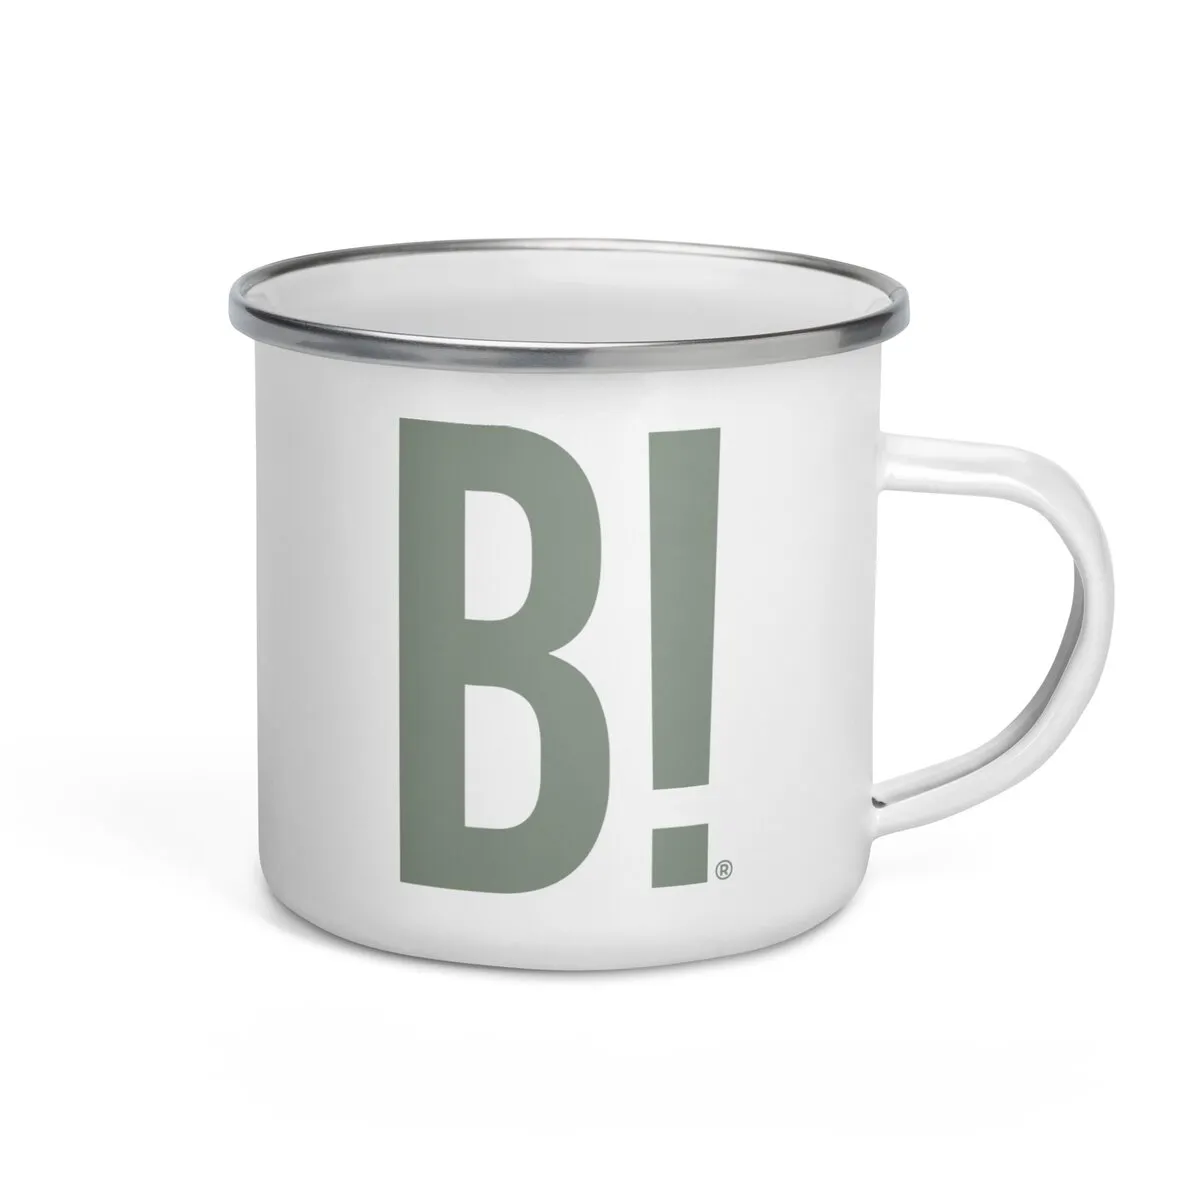 B! Enamel Mug